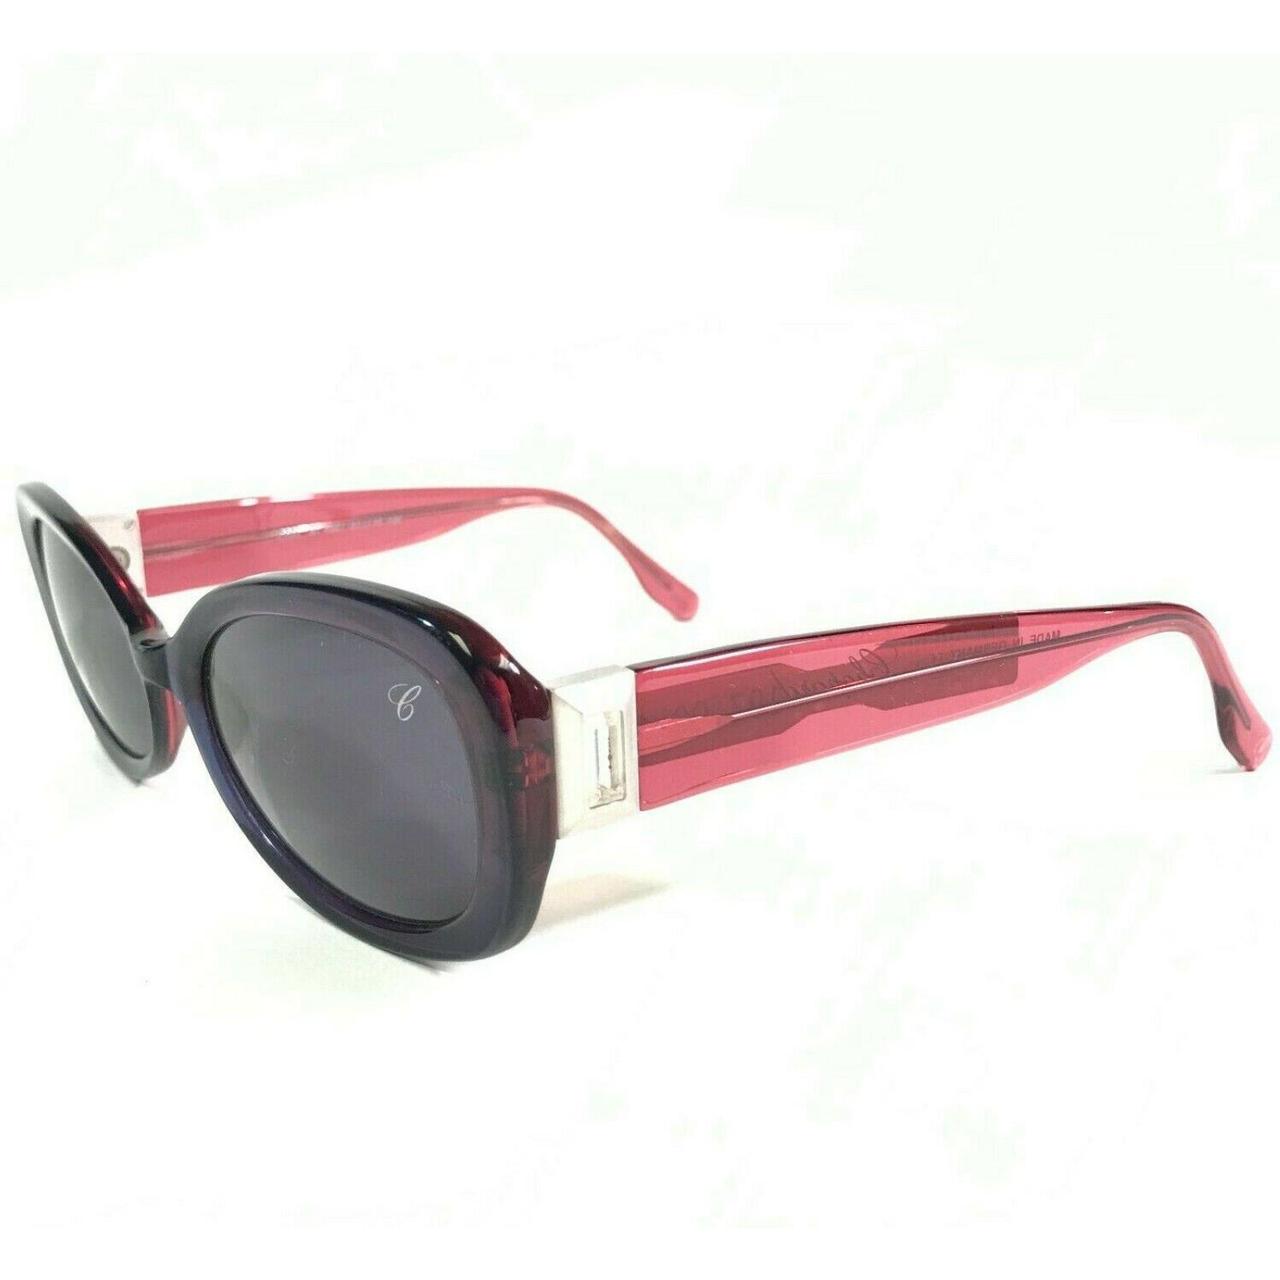 Product Image 1 - Chopard Sunglasses C555 00 6061